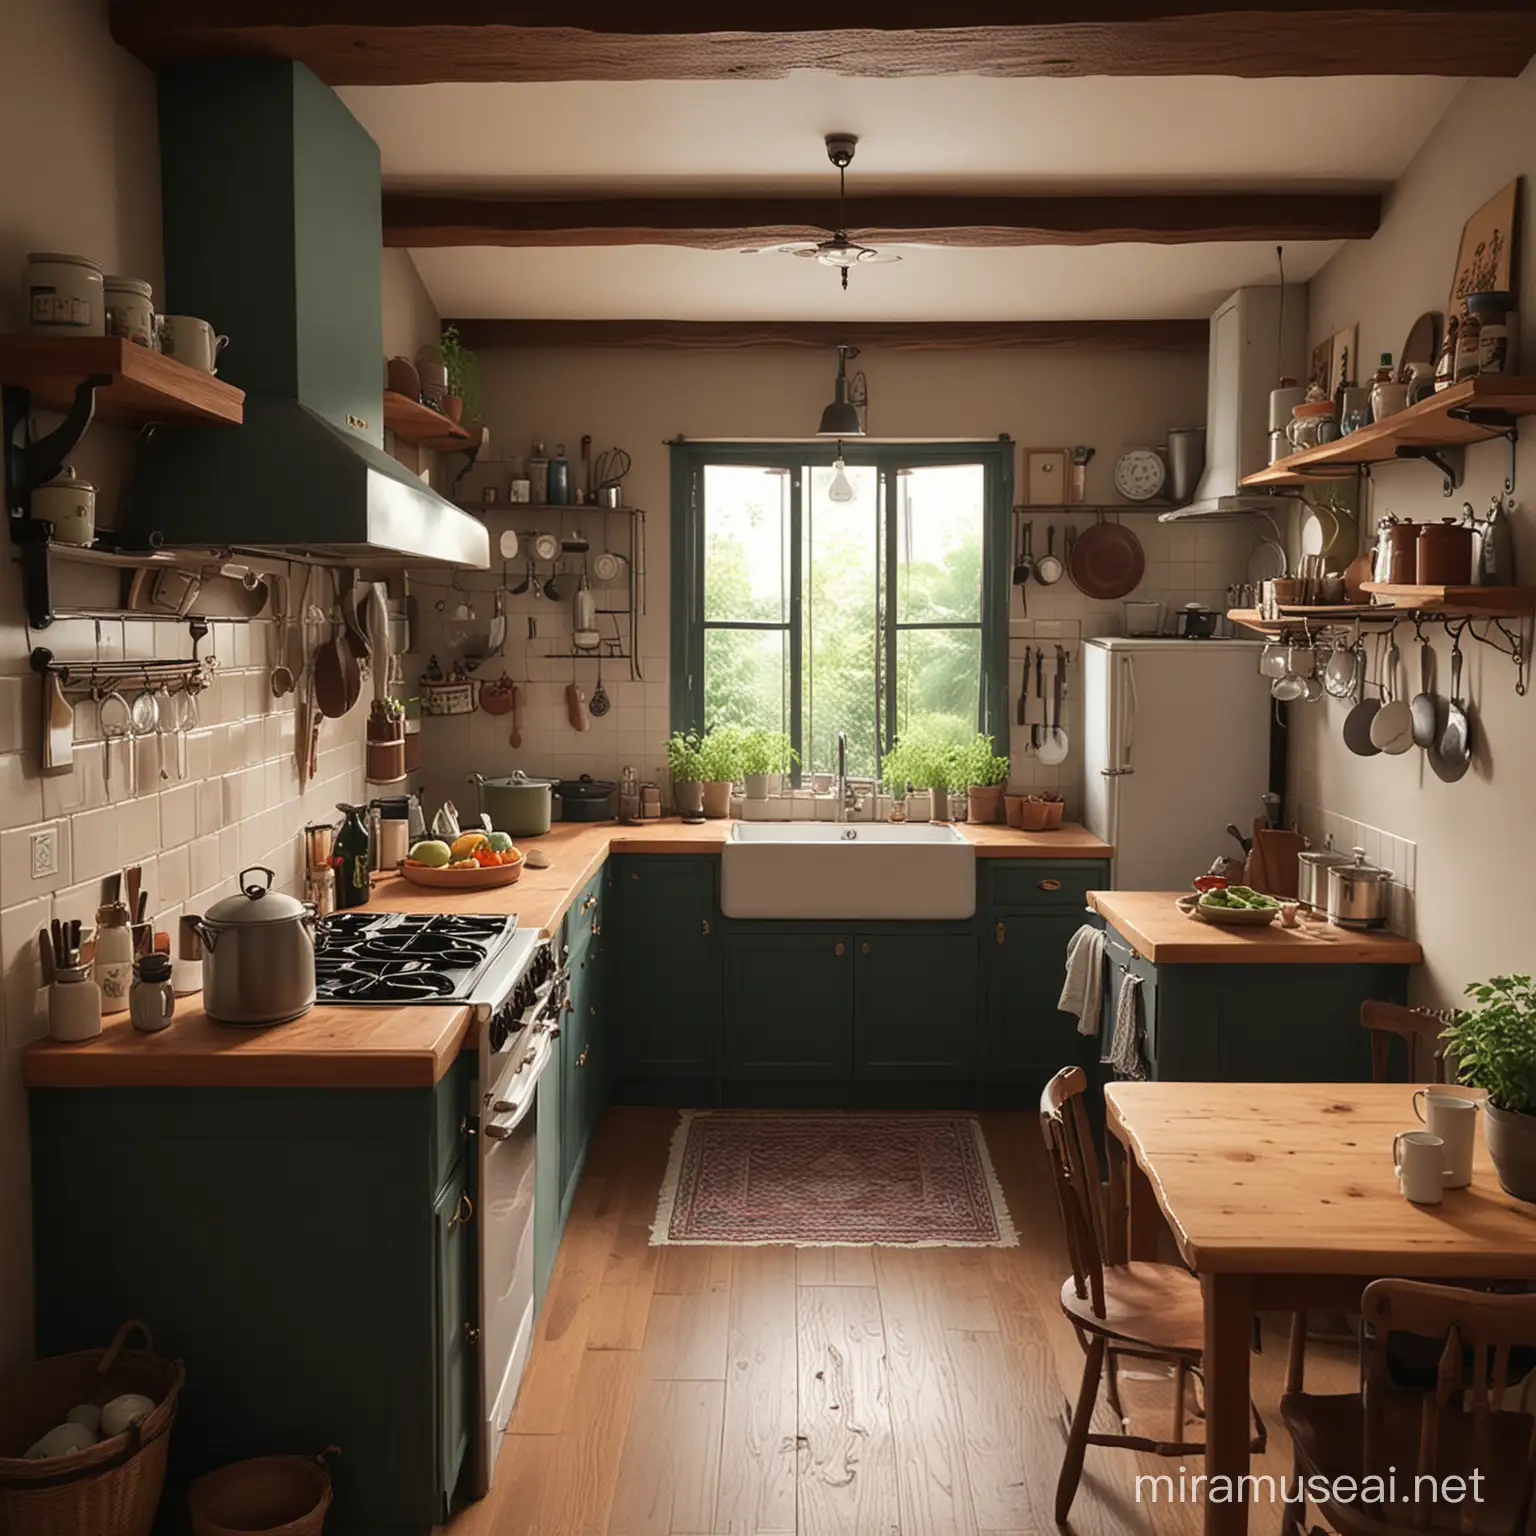 Cozy Cottagecore Kitchen with Studio Ghibli Inspiration